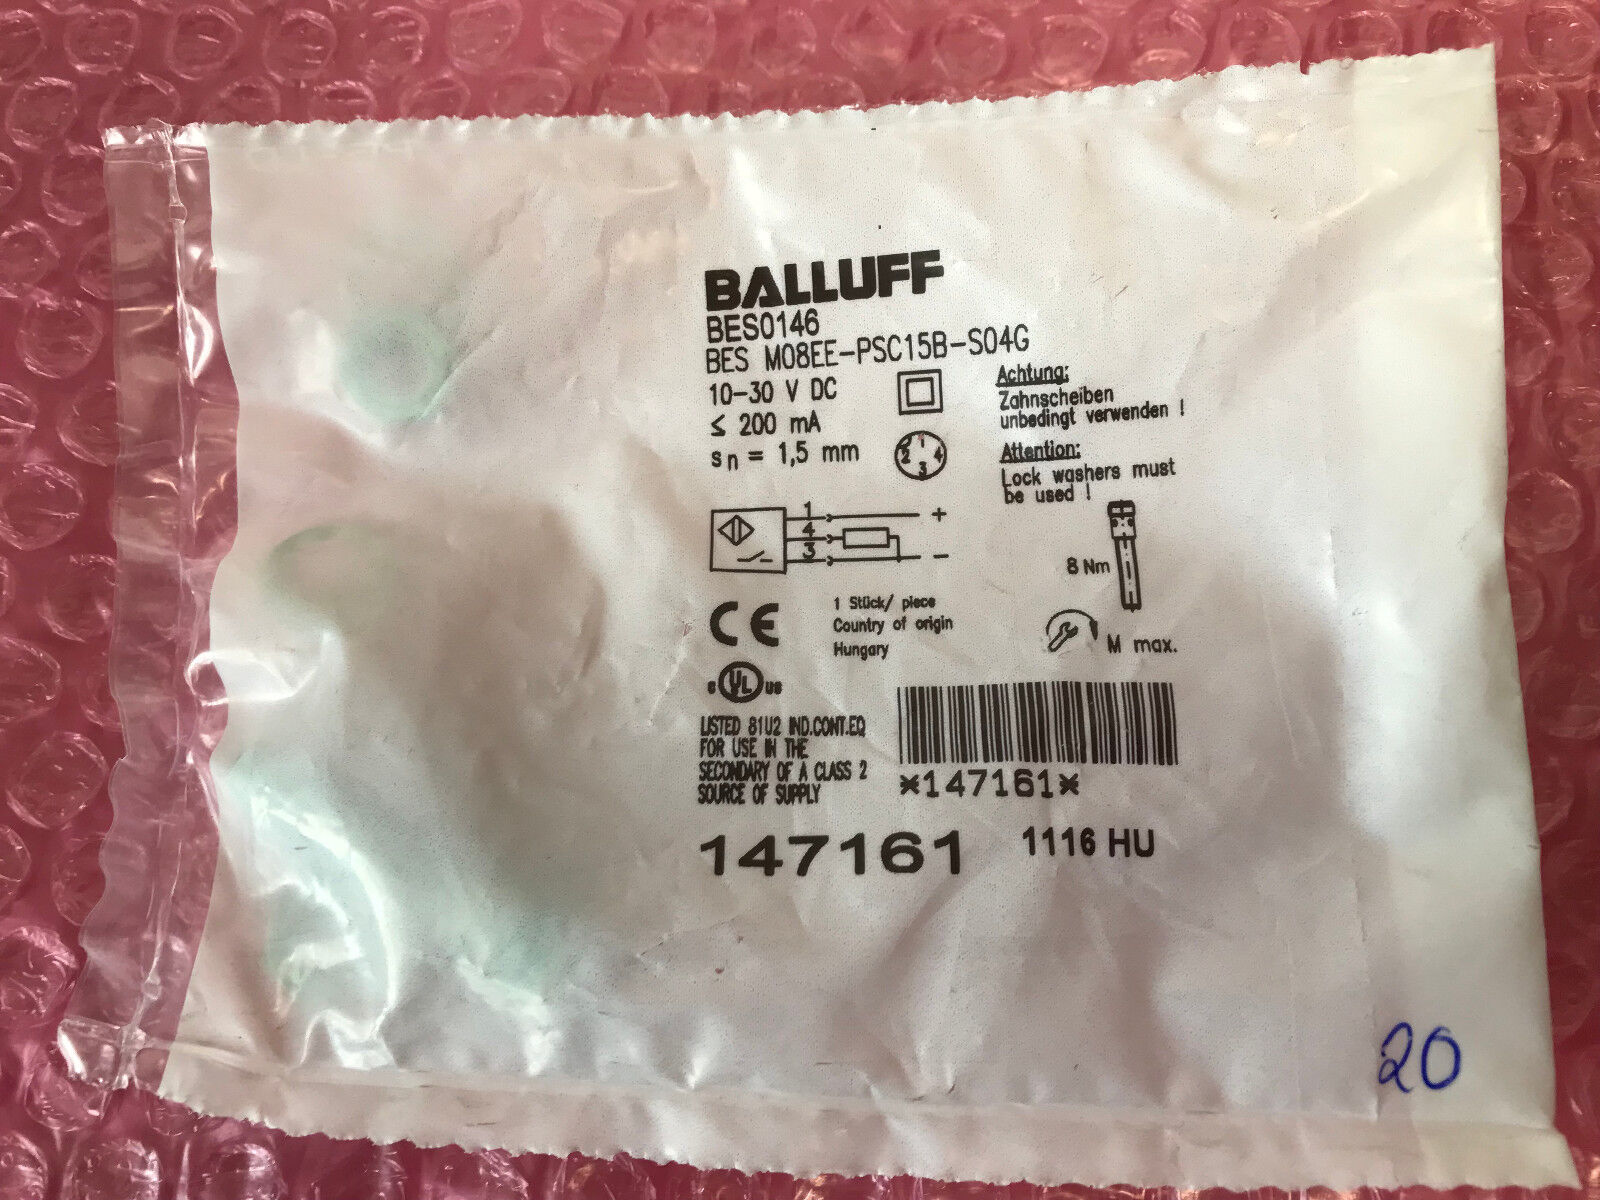 Balluff BESM 08ee-psc15b-s04g Inductive sensor//SN 1,5mm//147161